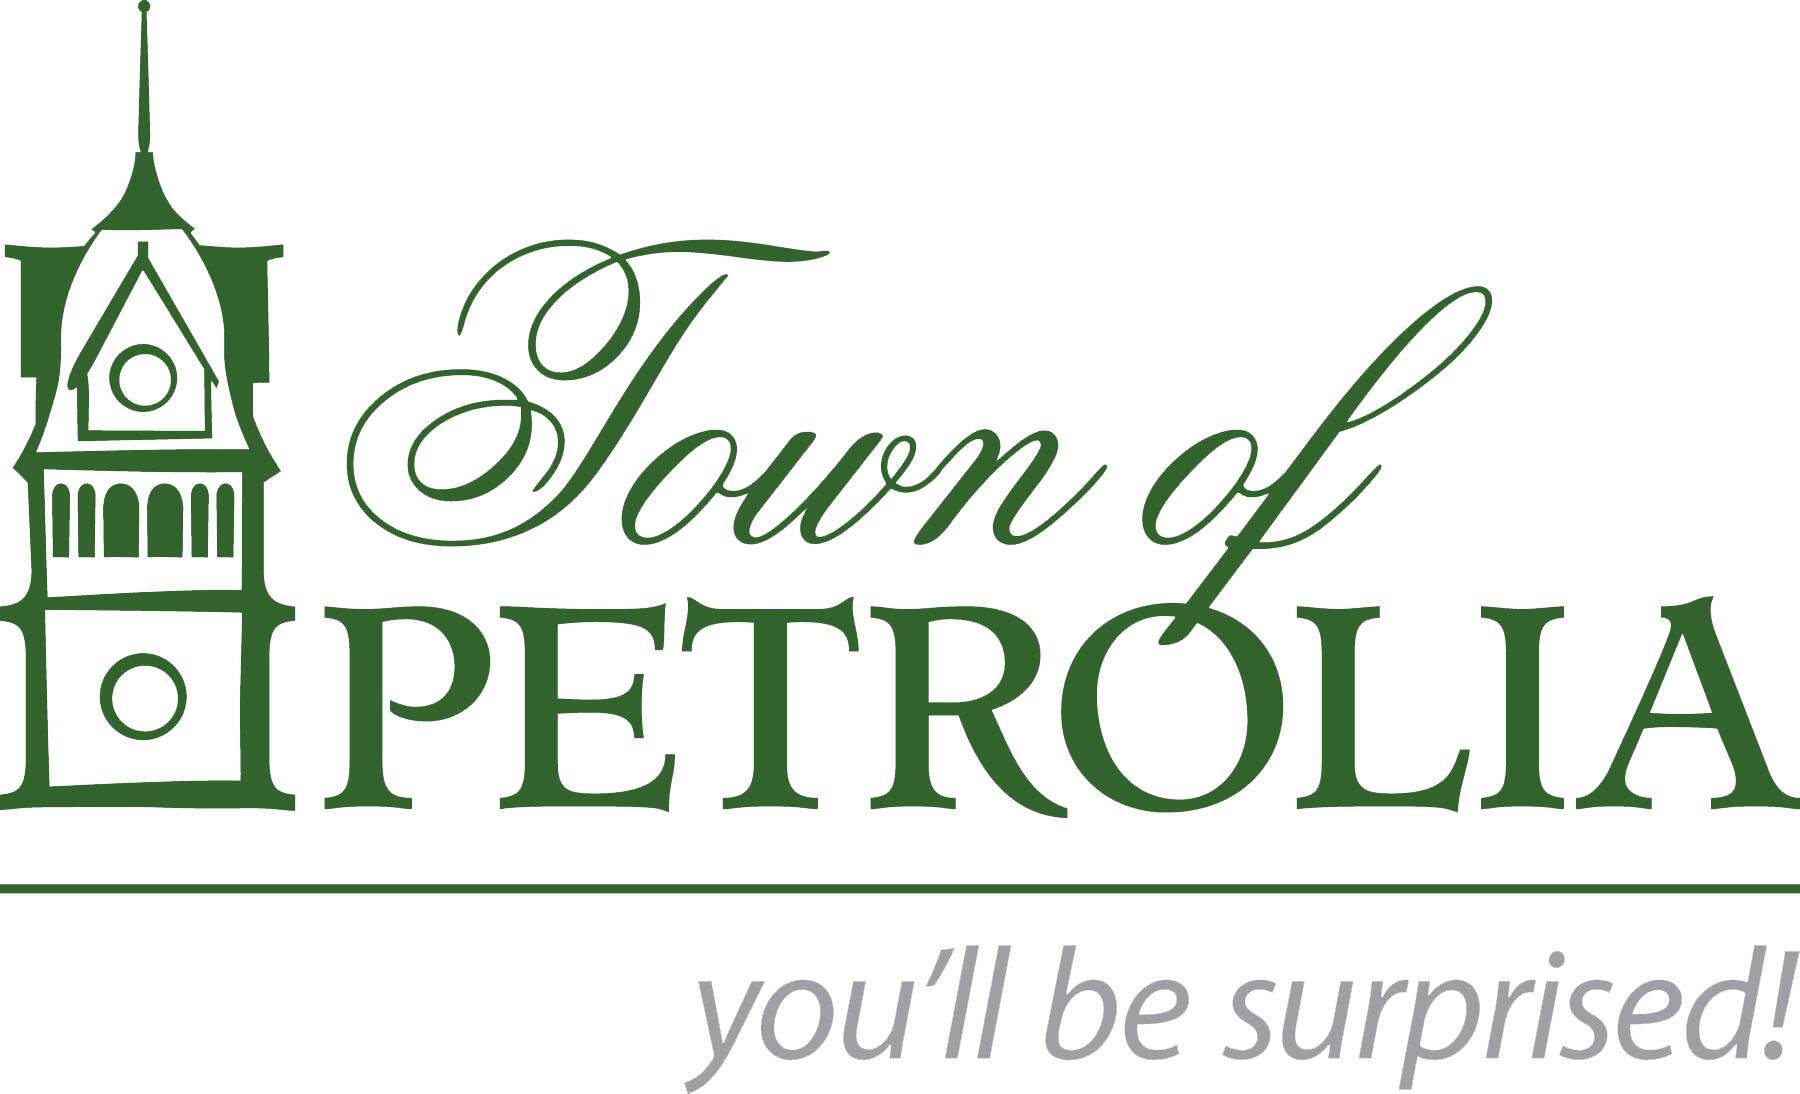 Town of Petrolia